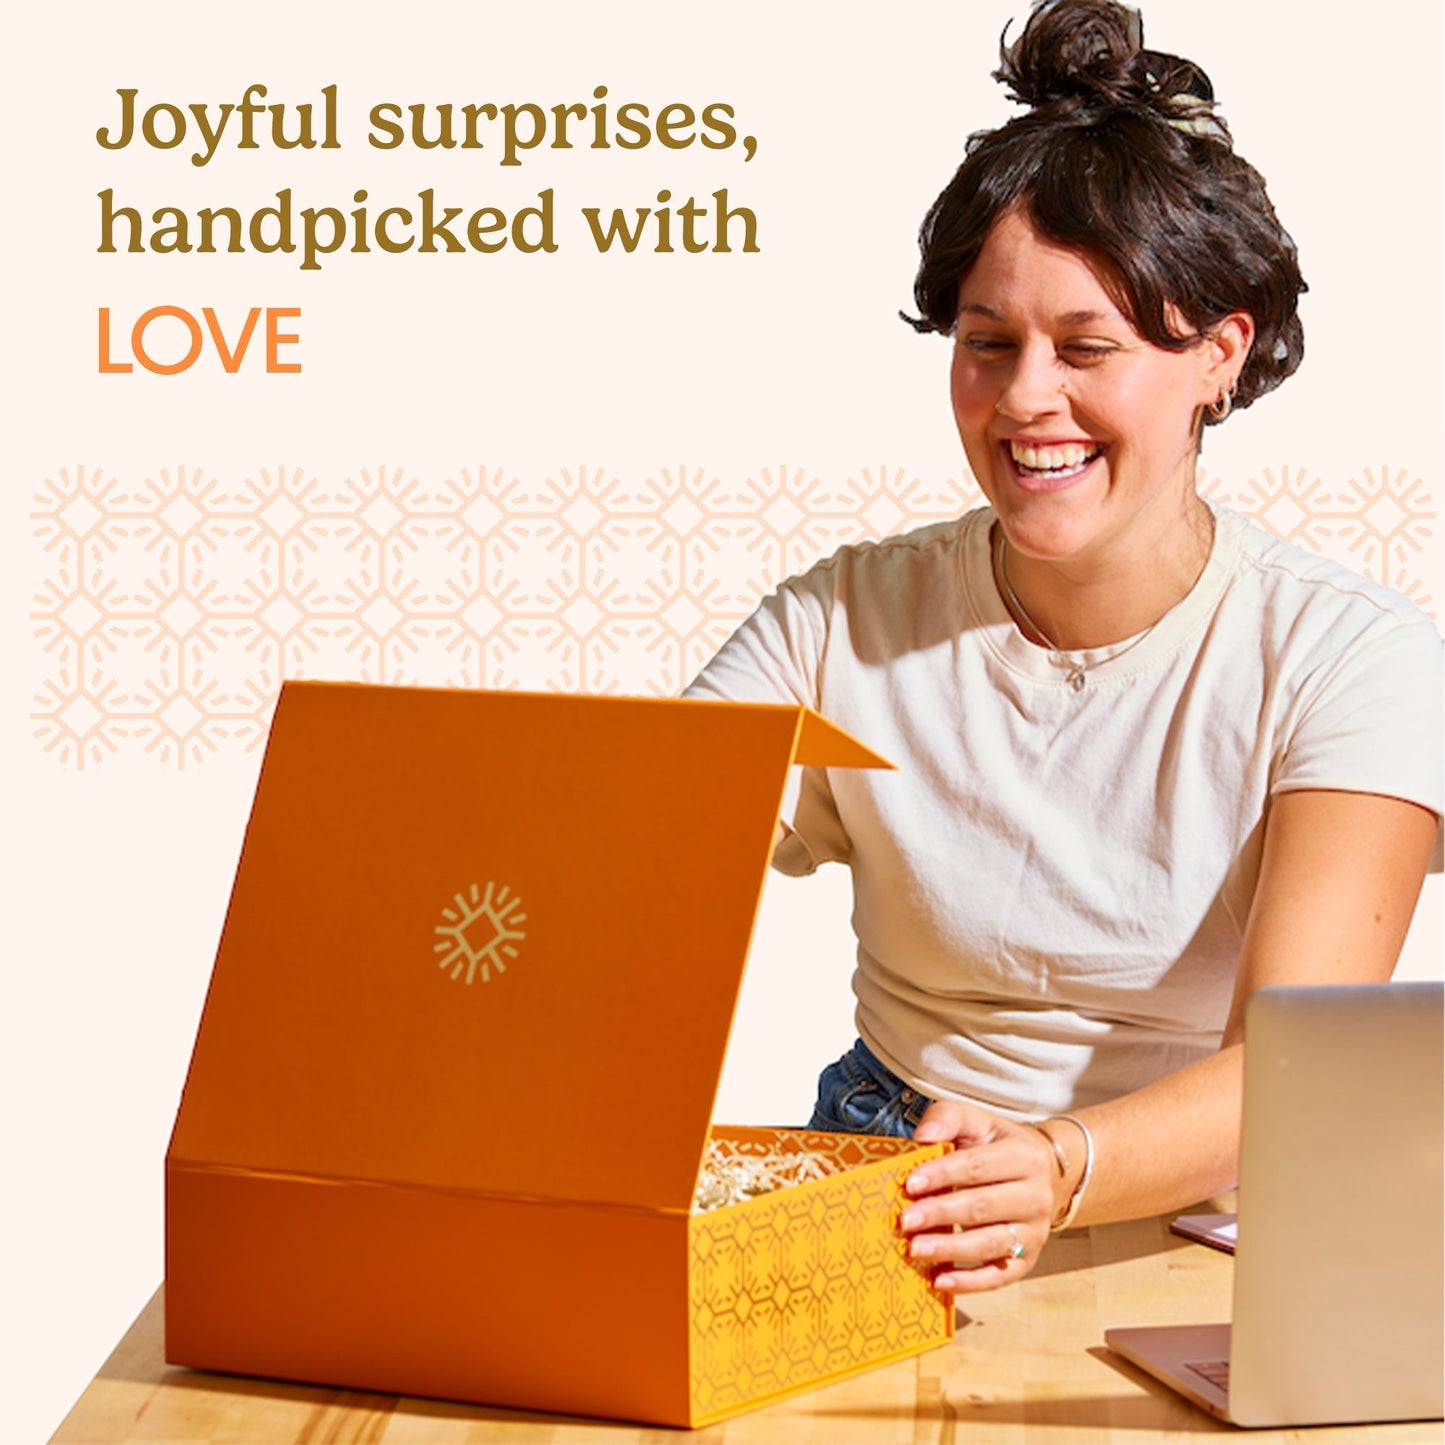 Joyful Co THIRSTY Gift Box